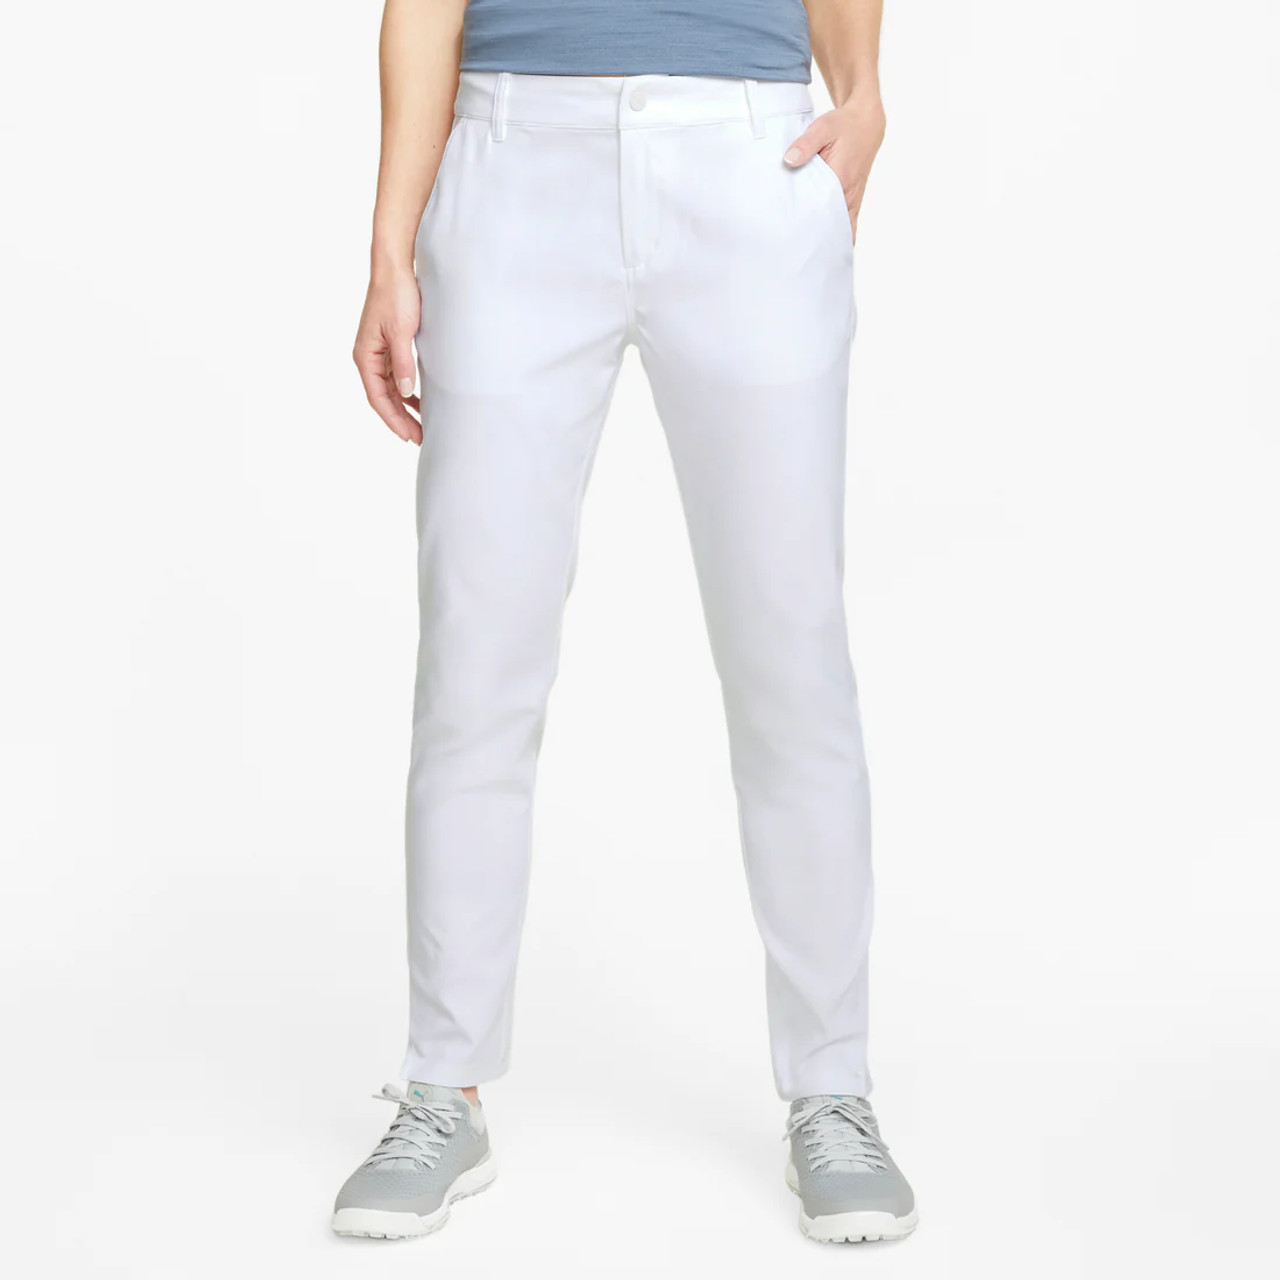 Puma Women's Boardwalk Golf Pants - Bright White - Fore Ladies